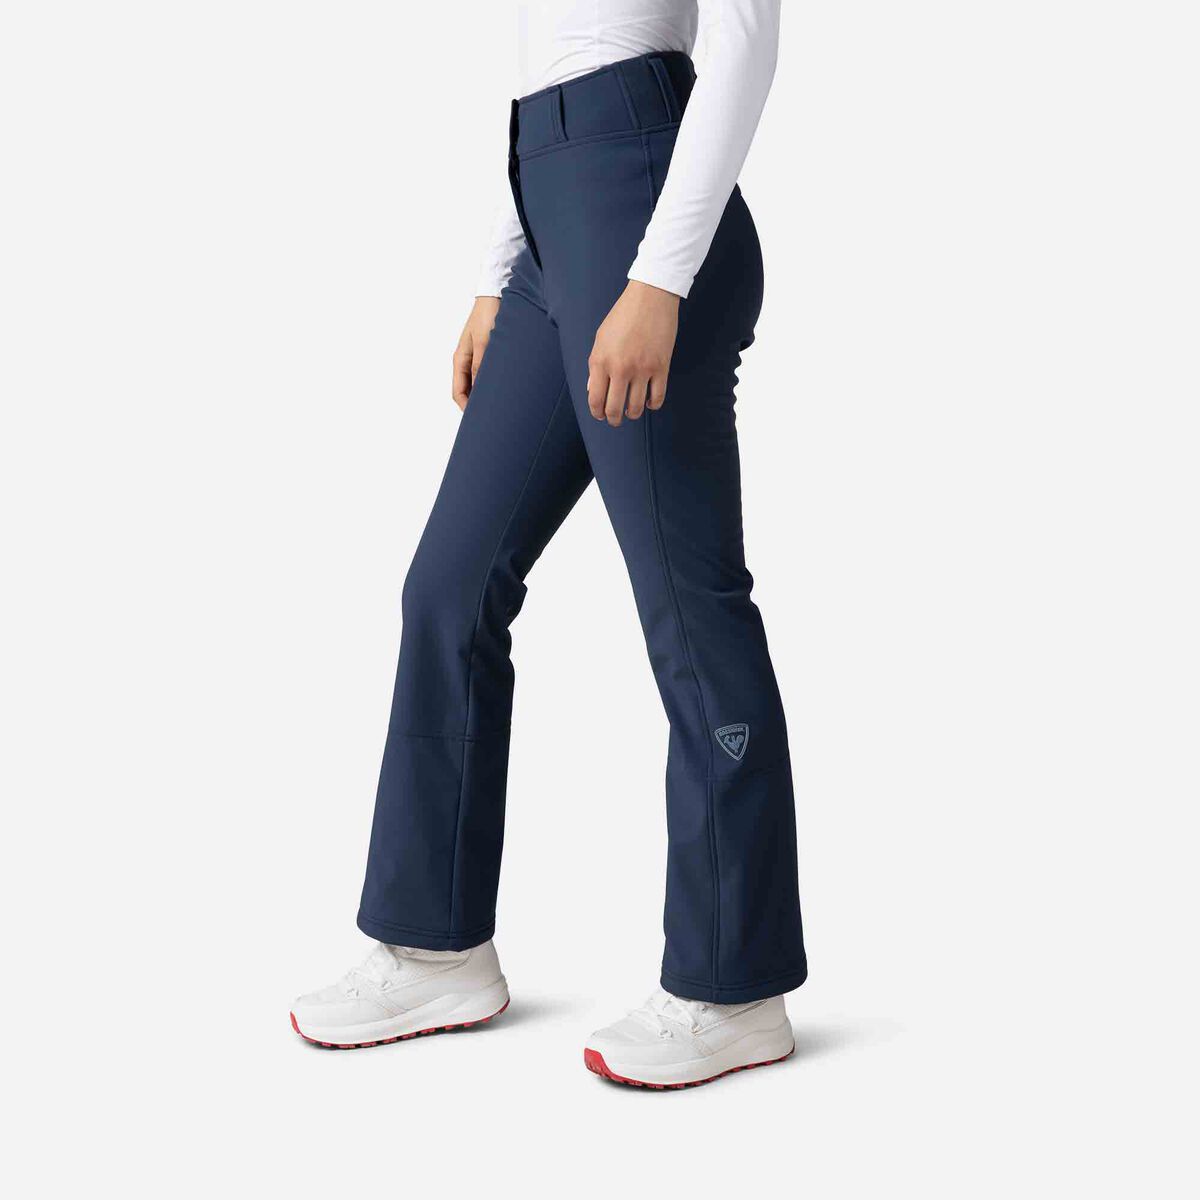 Women's Soft Shell Ski pants